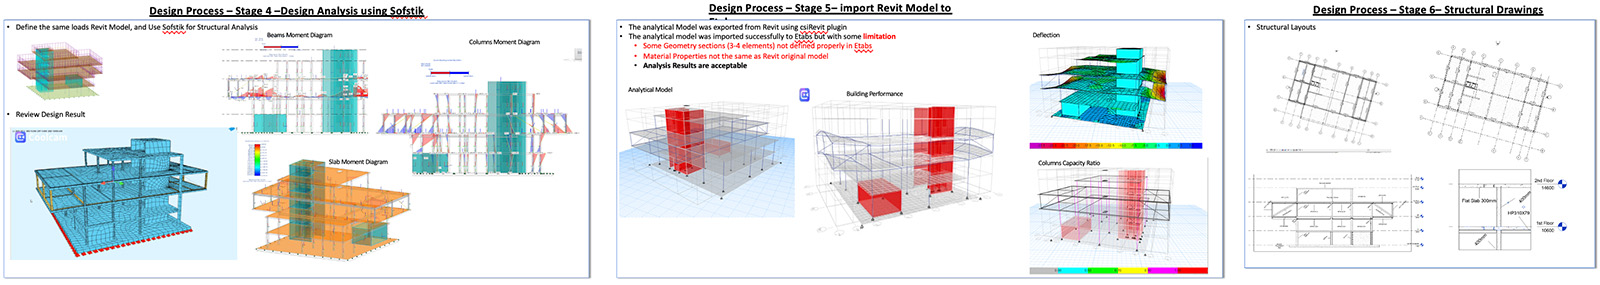 structural design stages diagram